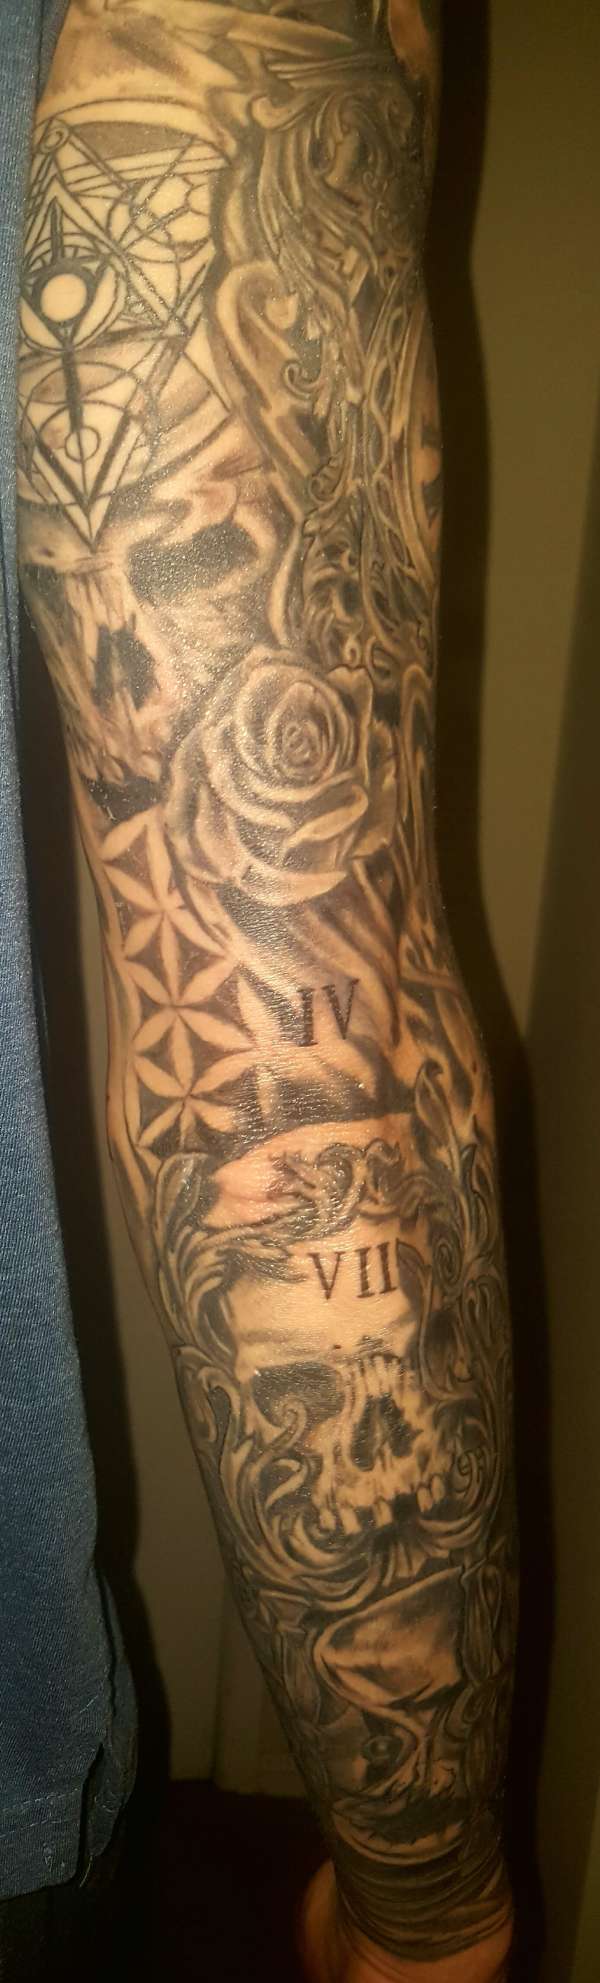 Skull, Roses ,& Hr Glass (next part of sleeve). tattoo